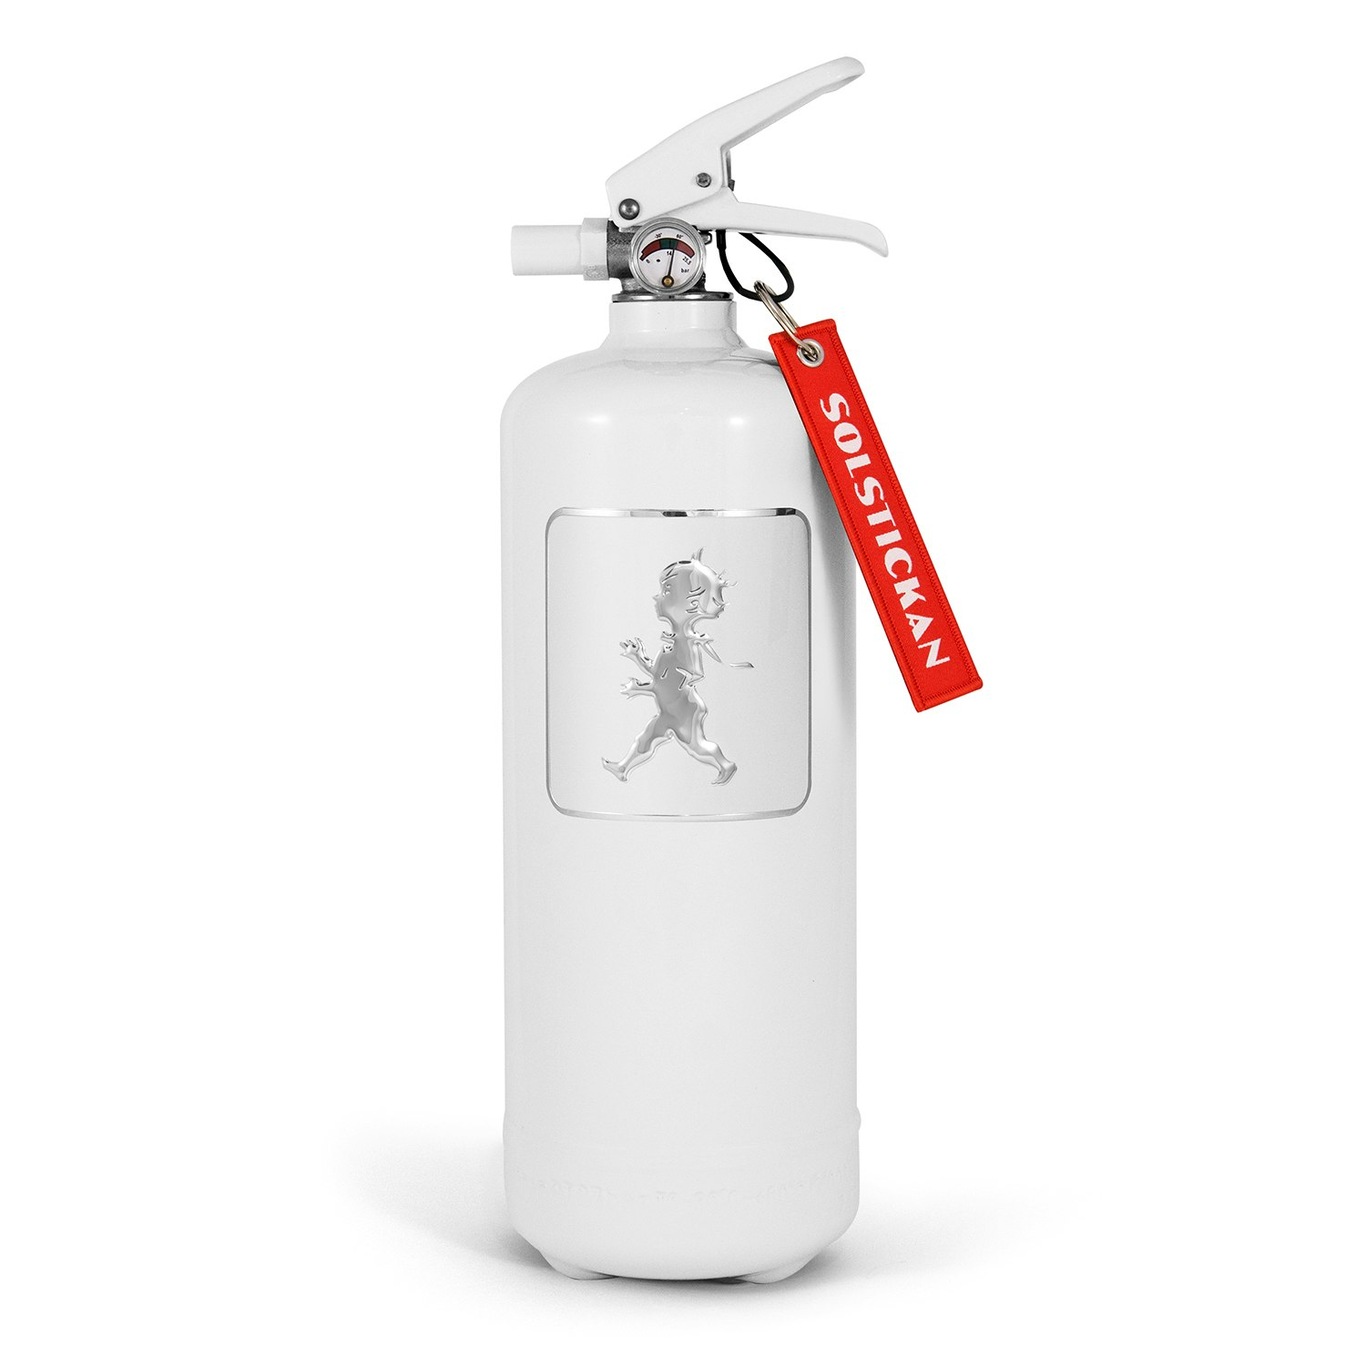 Solstickan Fire Extinguisher 2 kg, White/White